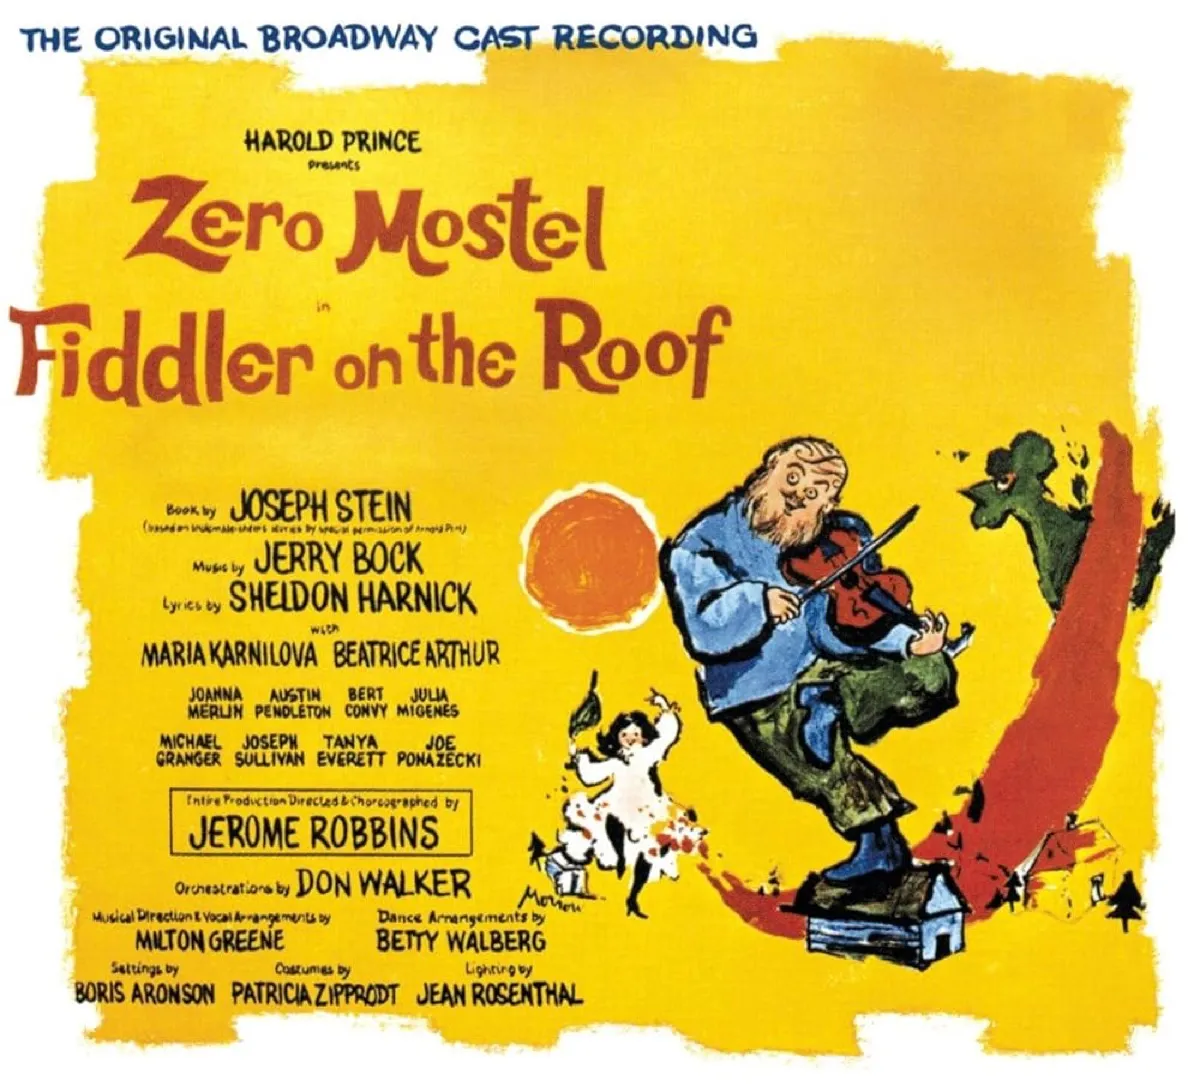 Fiddler on the Roof cast album